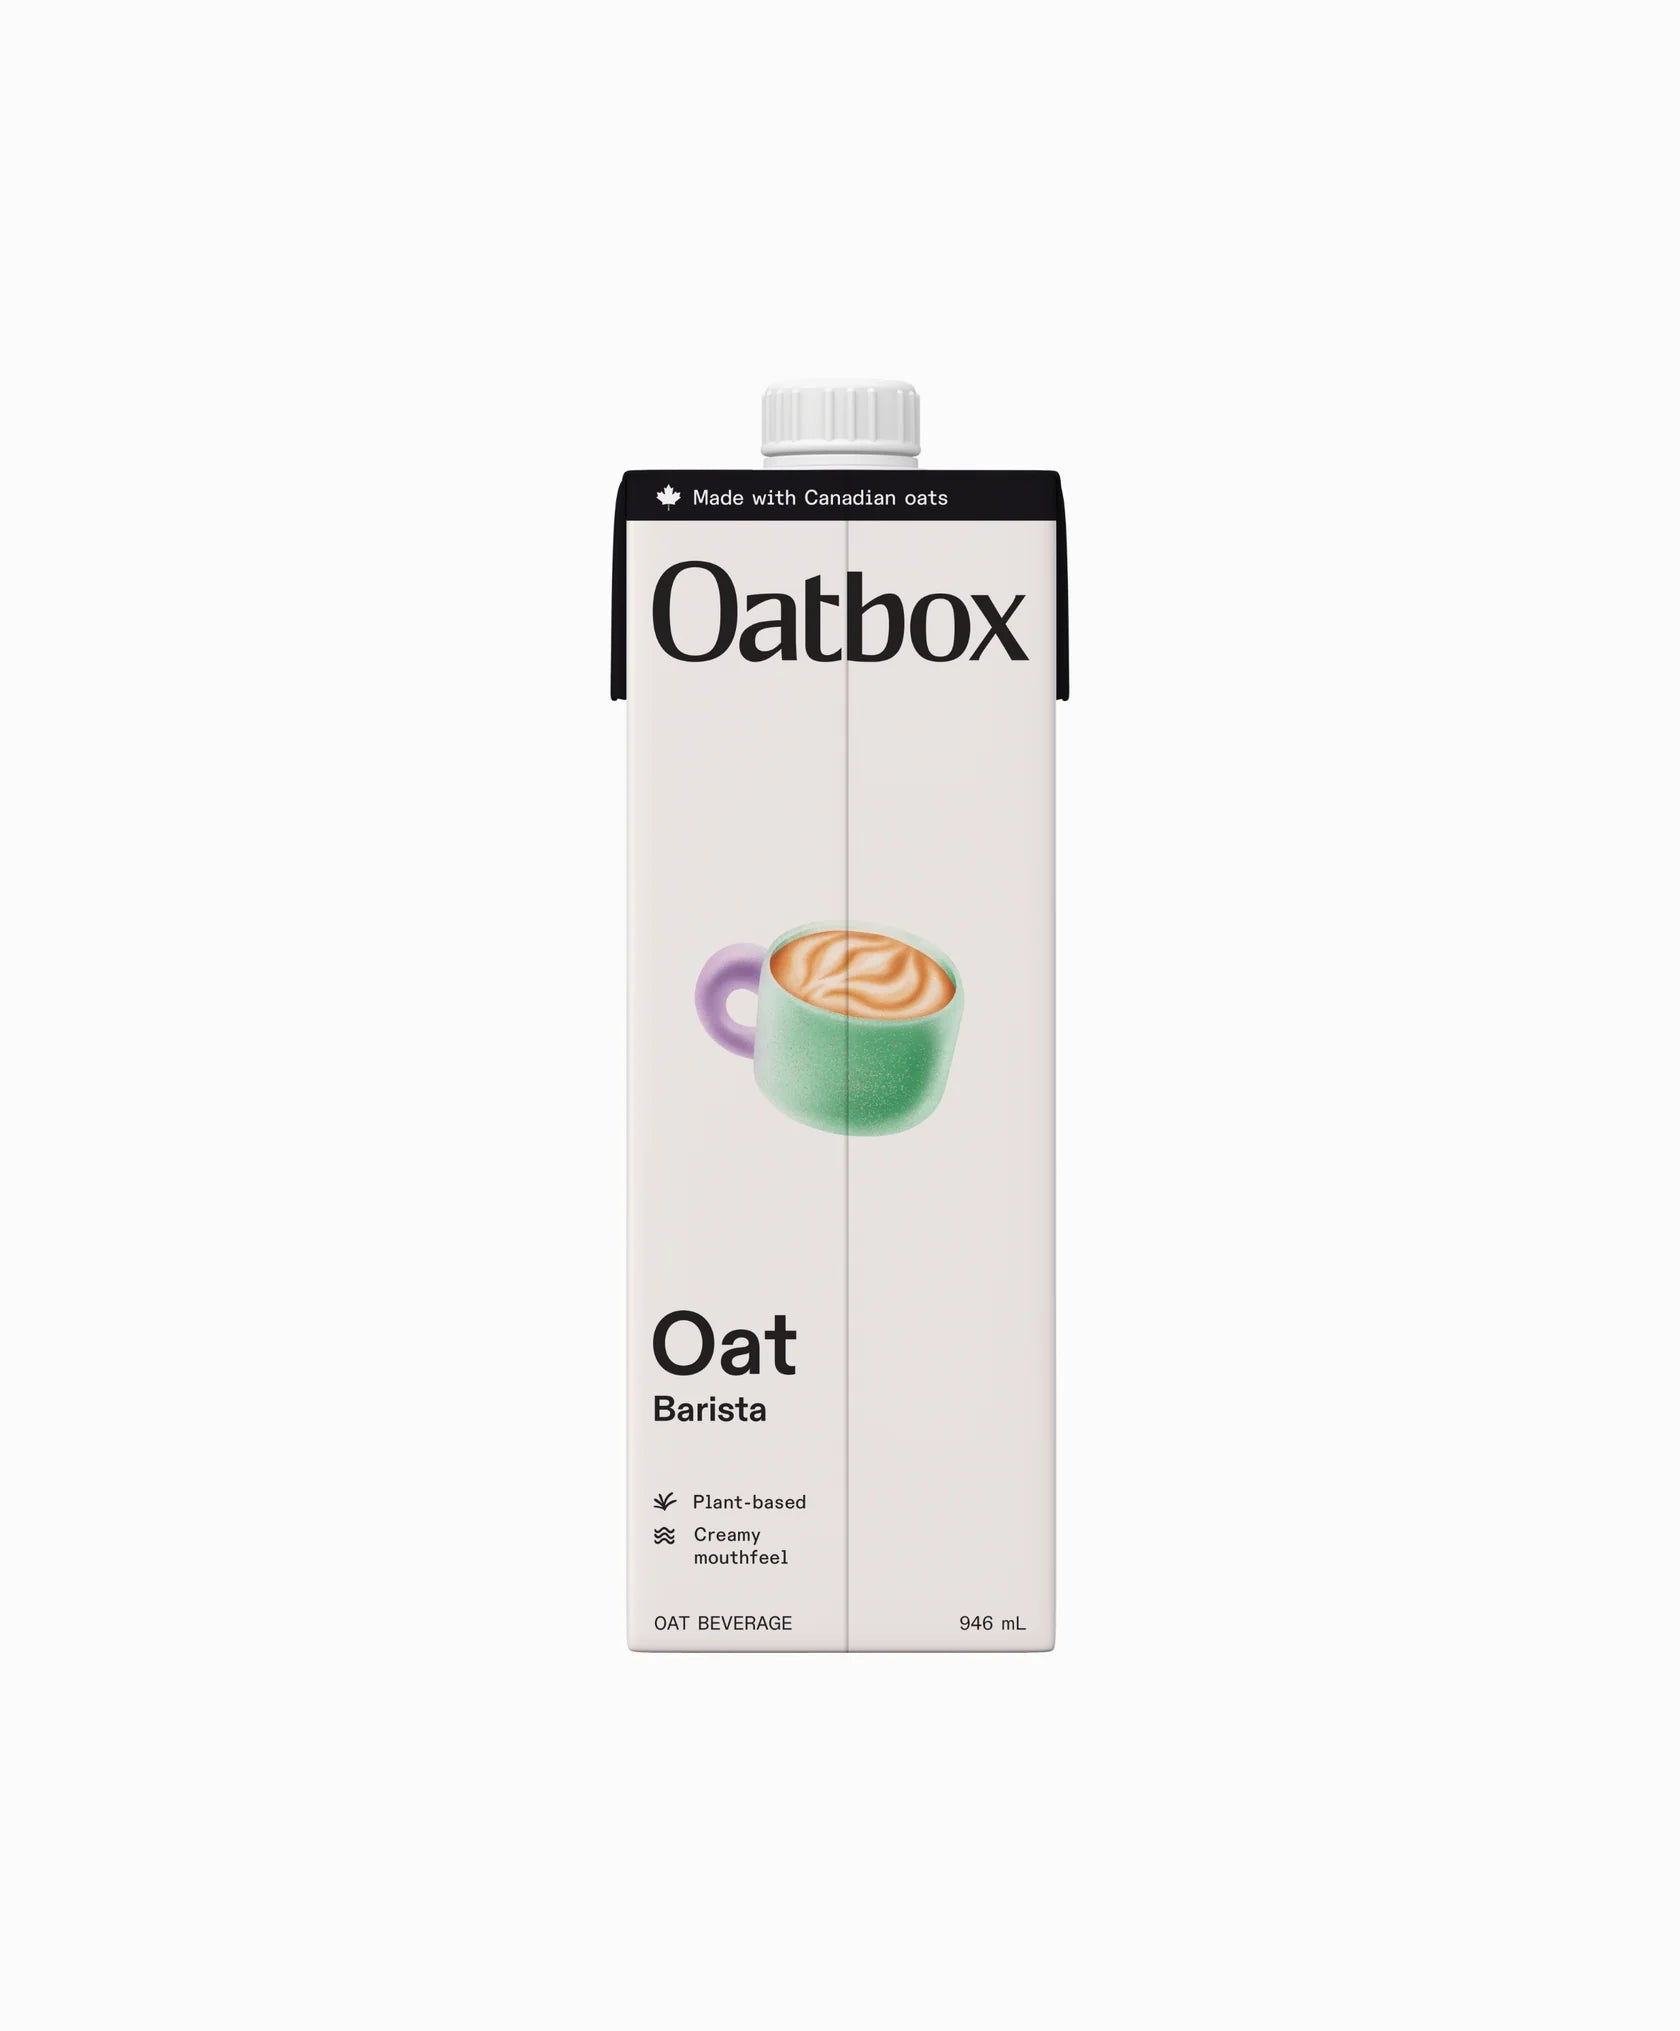 Oatbox Barista Oat Beverage - Image 1